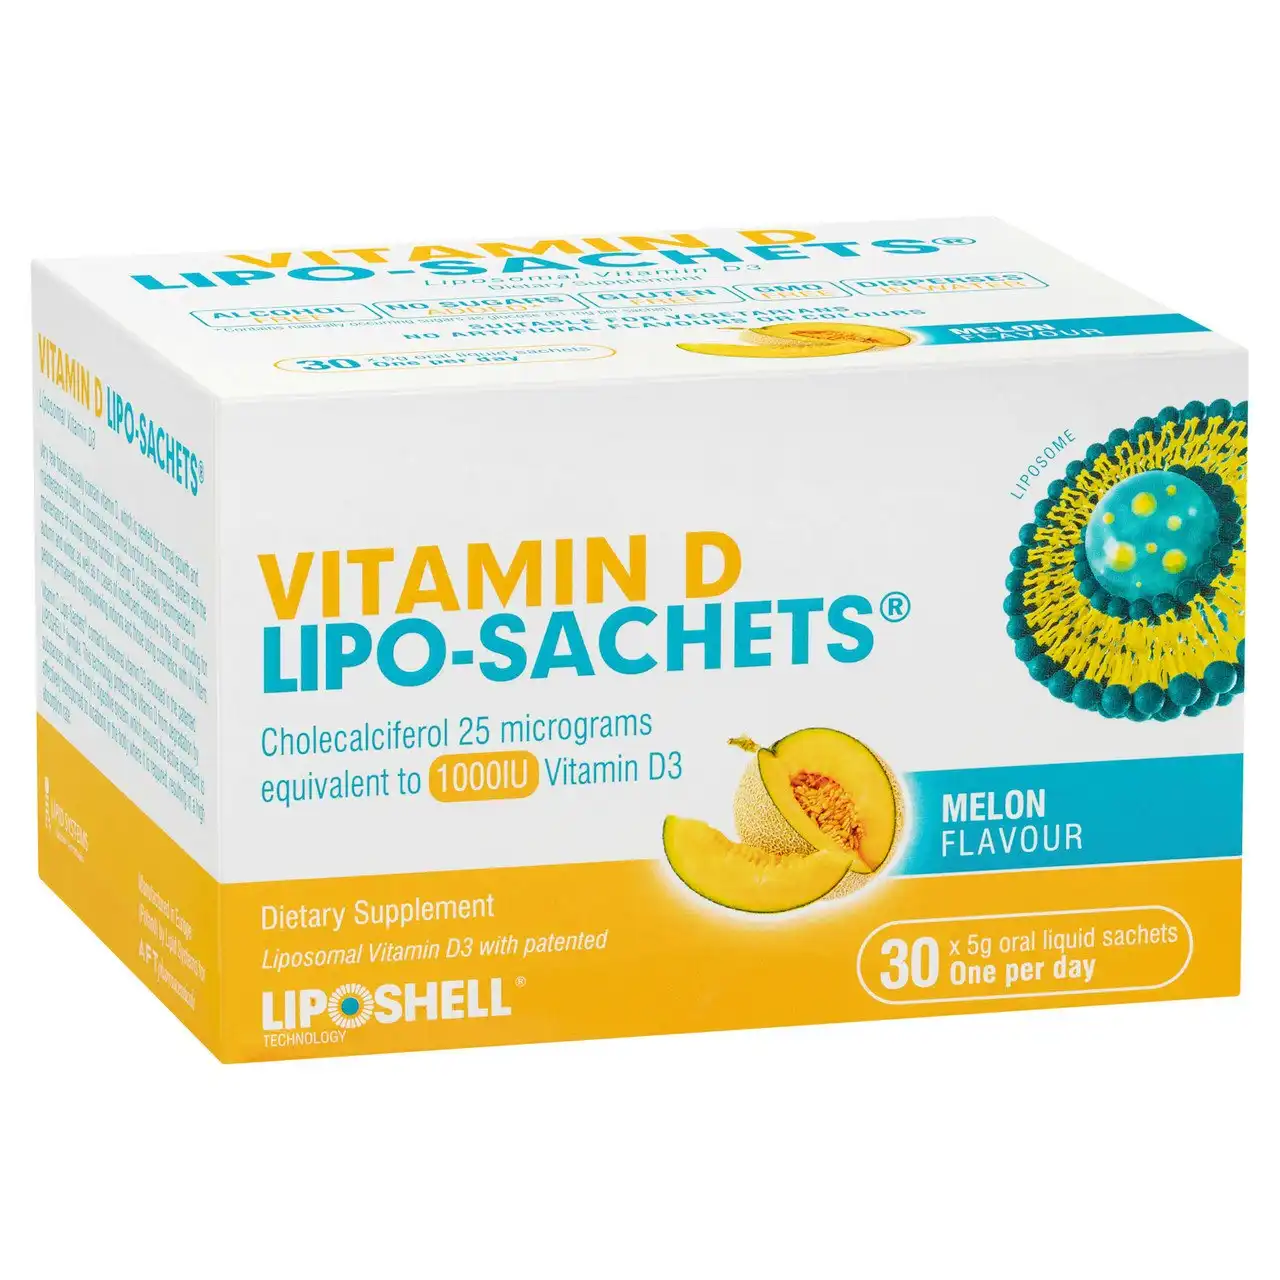 Vitamin D Lipo-Sachets(R) Melon Flavour 30 Sachets x 5g